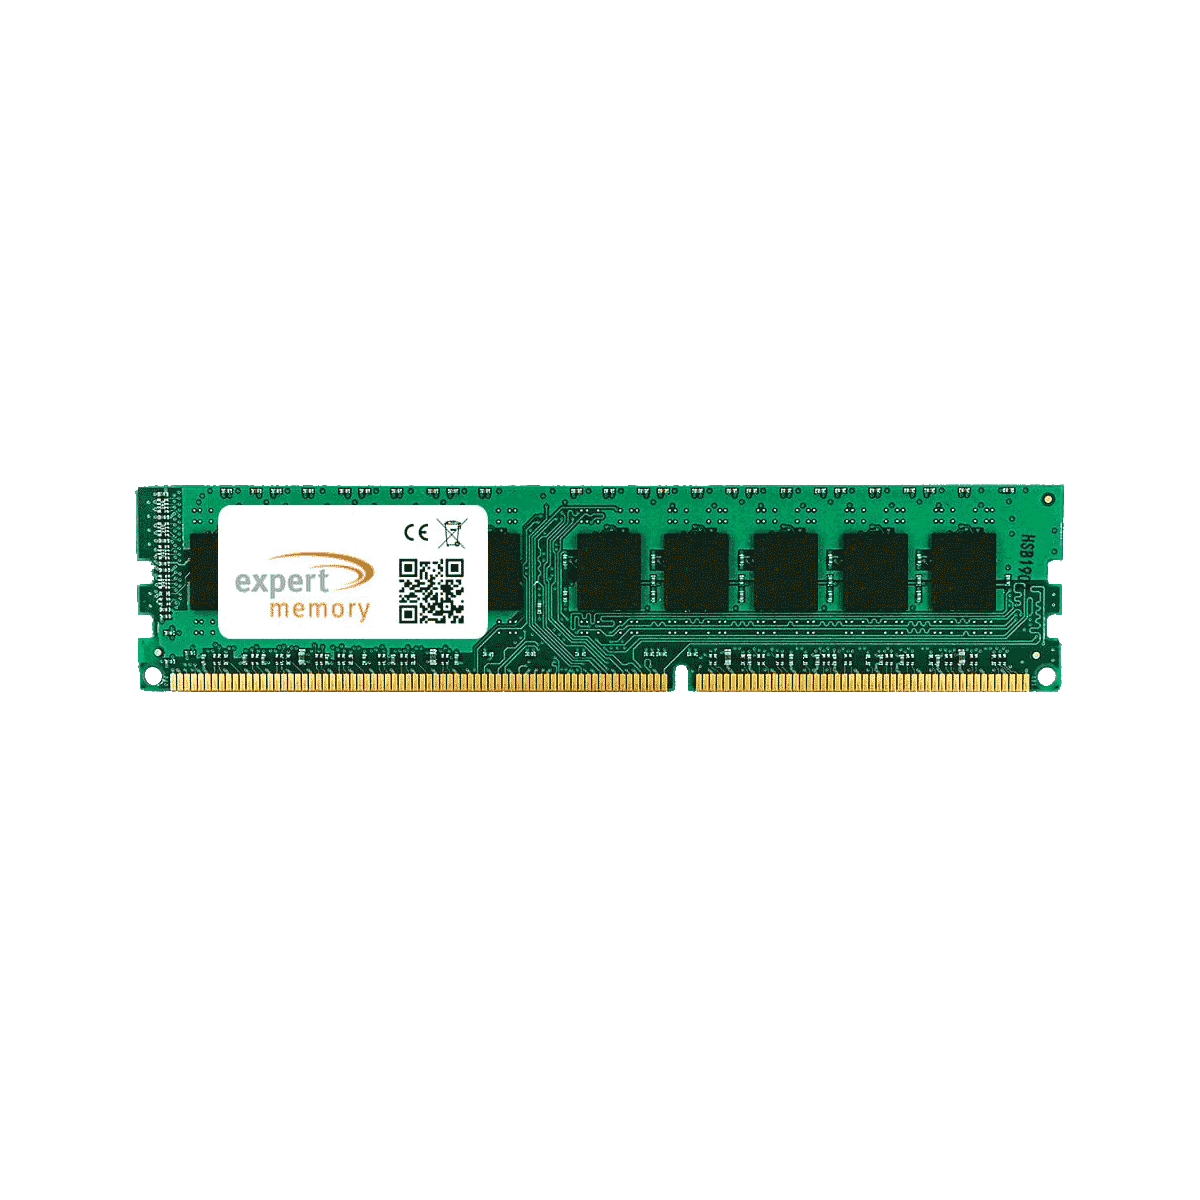 EXPERT Upgrade 8 DDR3 RAM MEMORY E2051 GB 8GB PC Memory Medion D Akoya